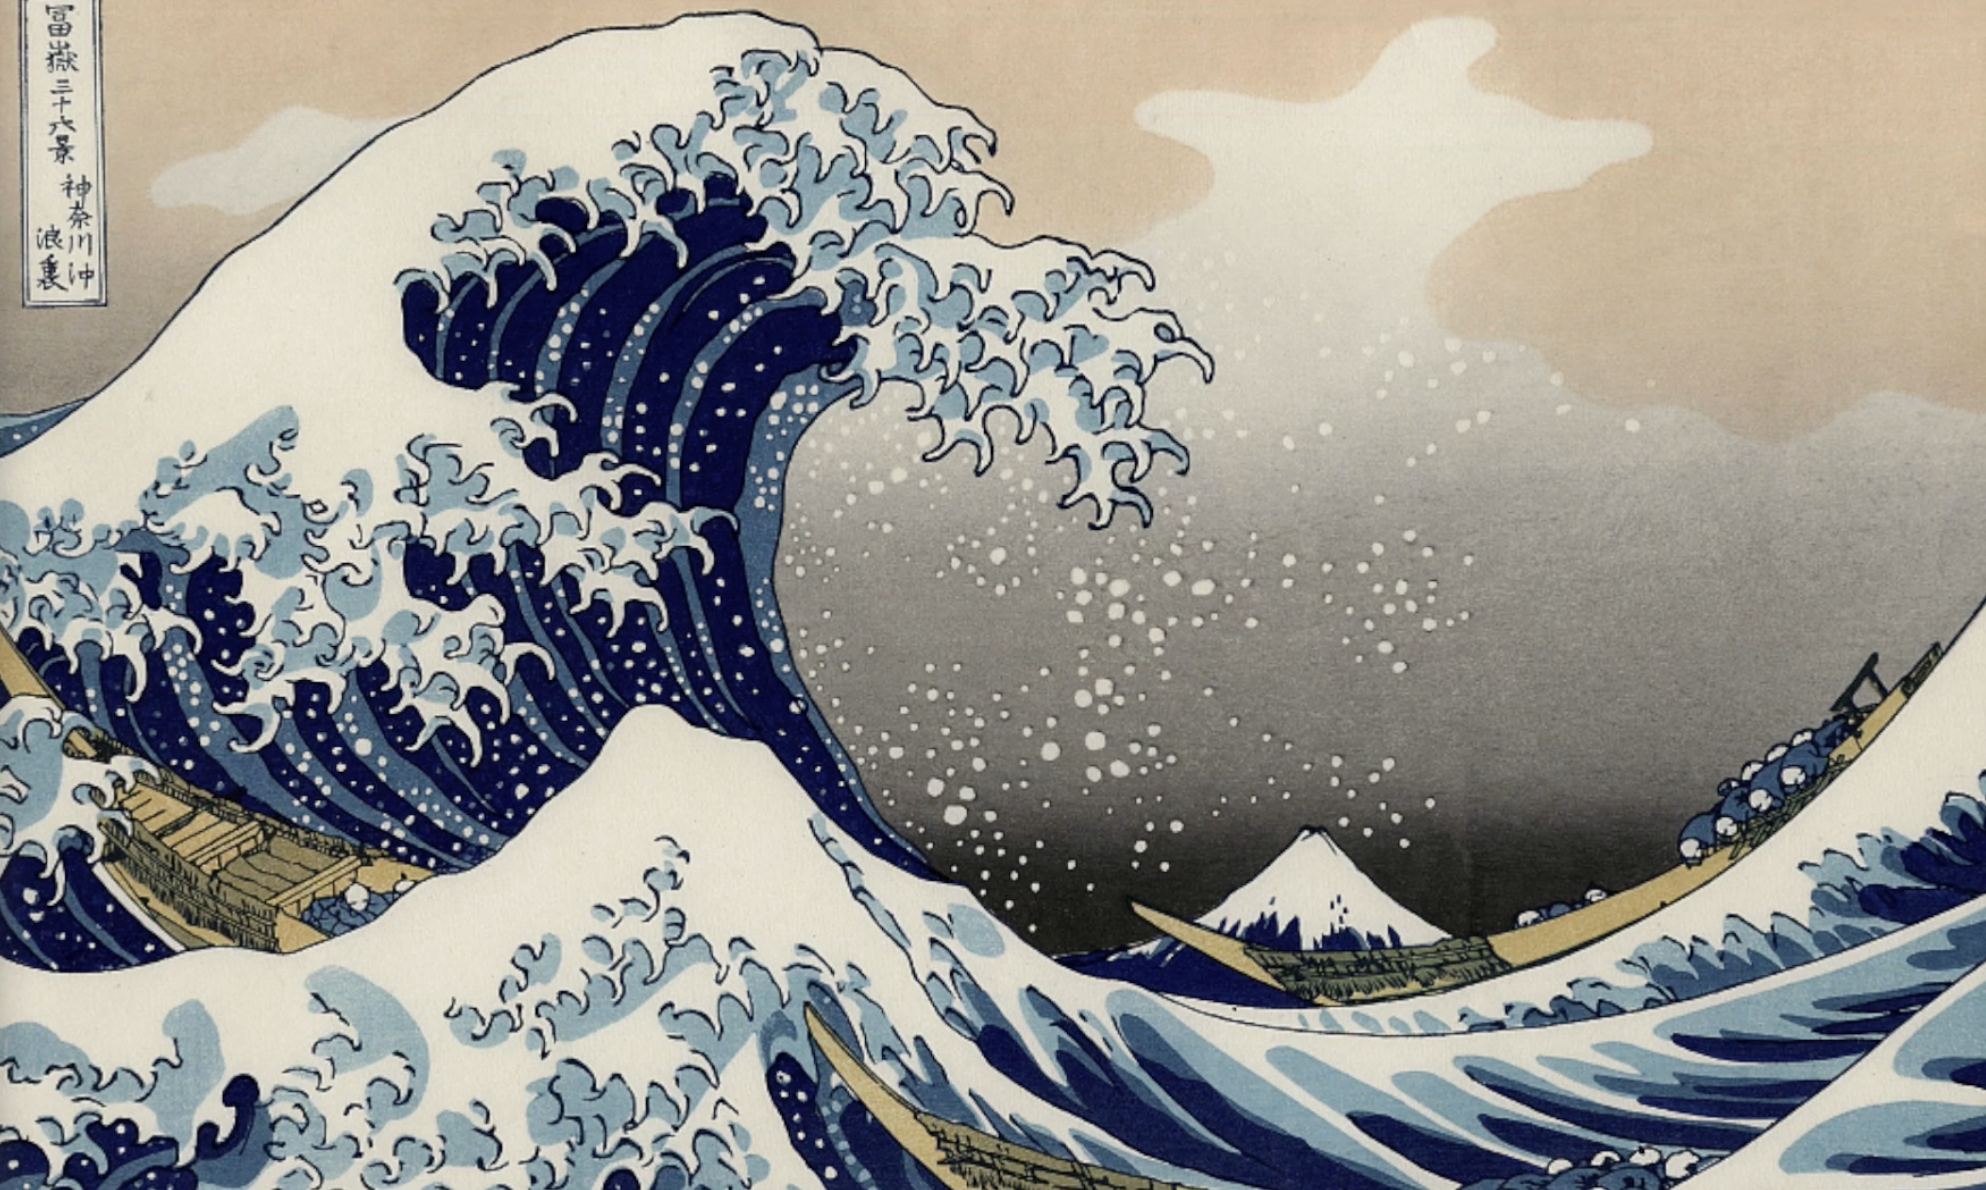 Details of Japanese ukiyo-e artist Katsushika Hokusai's 